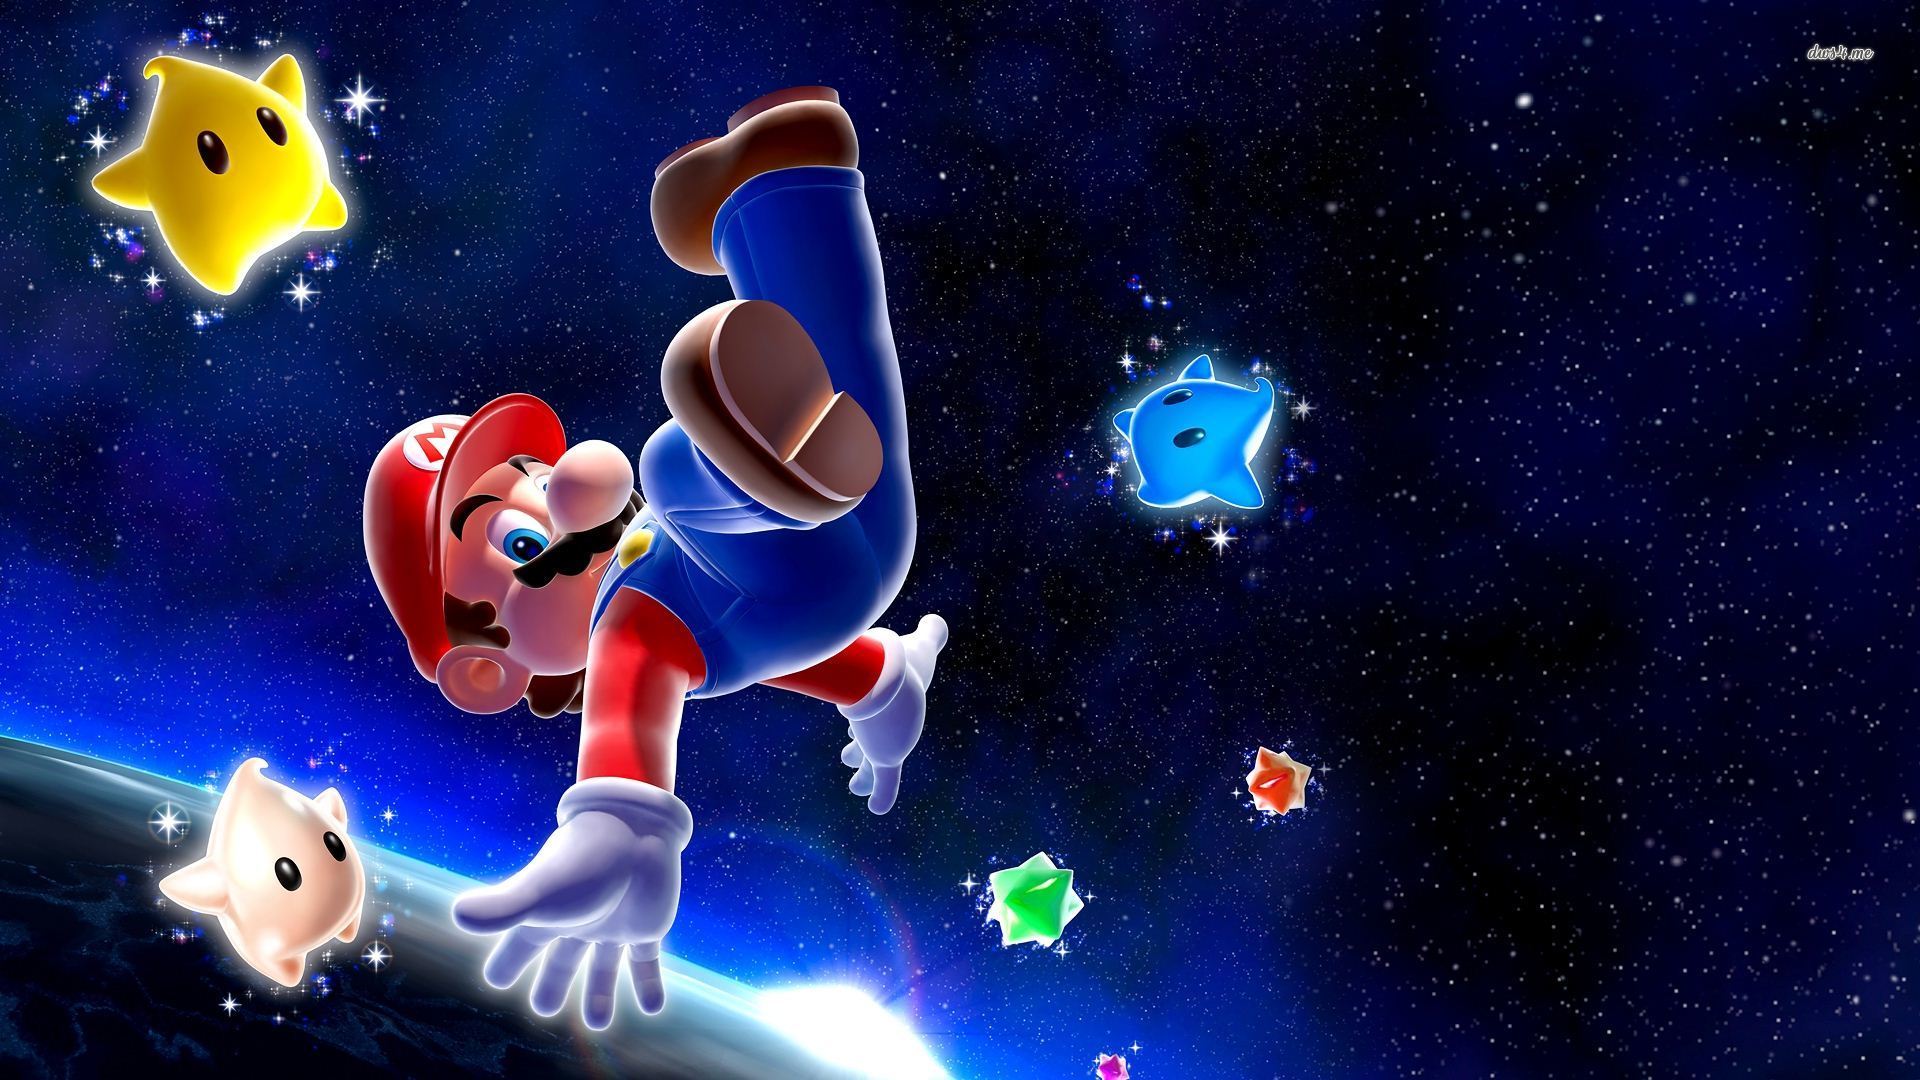 Mario - Super Mario Galaxy wallpaper - Game wallpapers - #42818